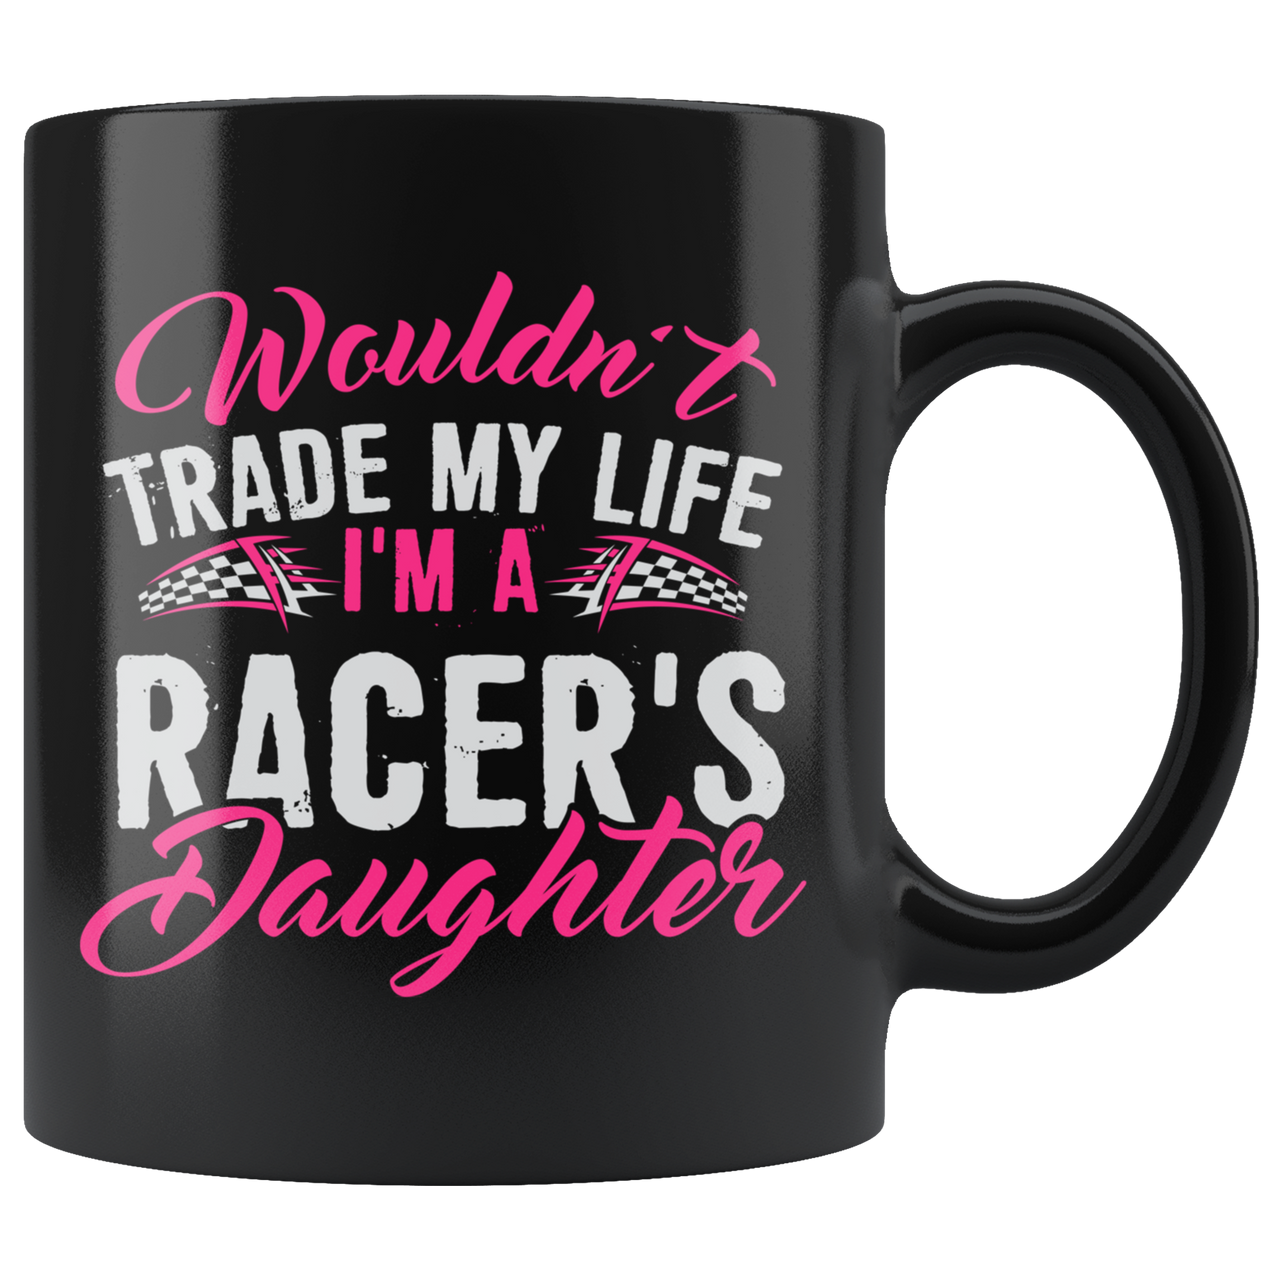 Wouldn't Trade My Life I'm A Racer's Daughter Mug!